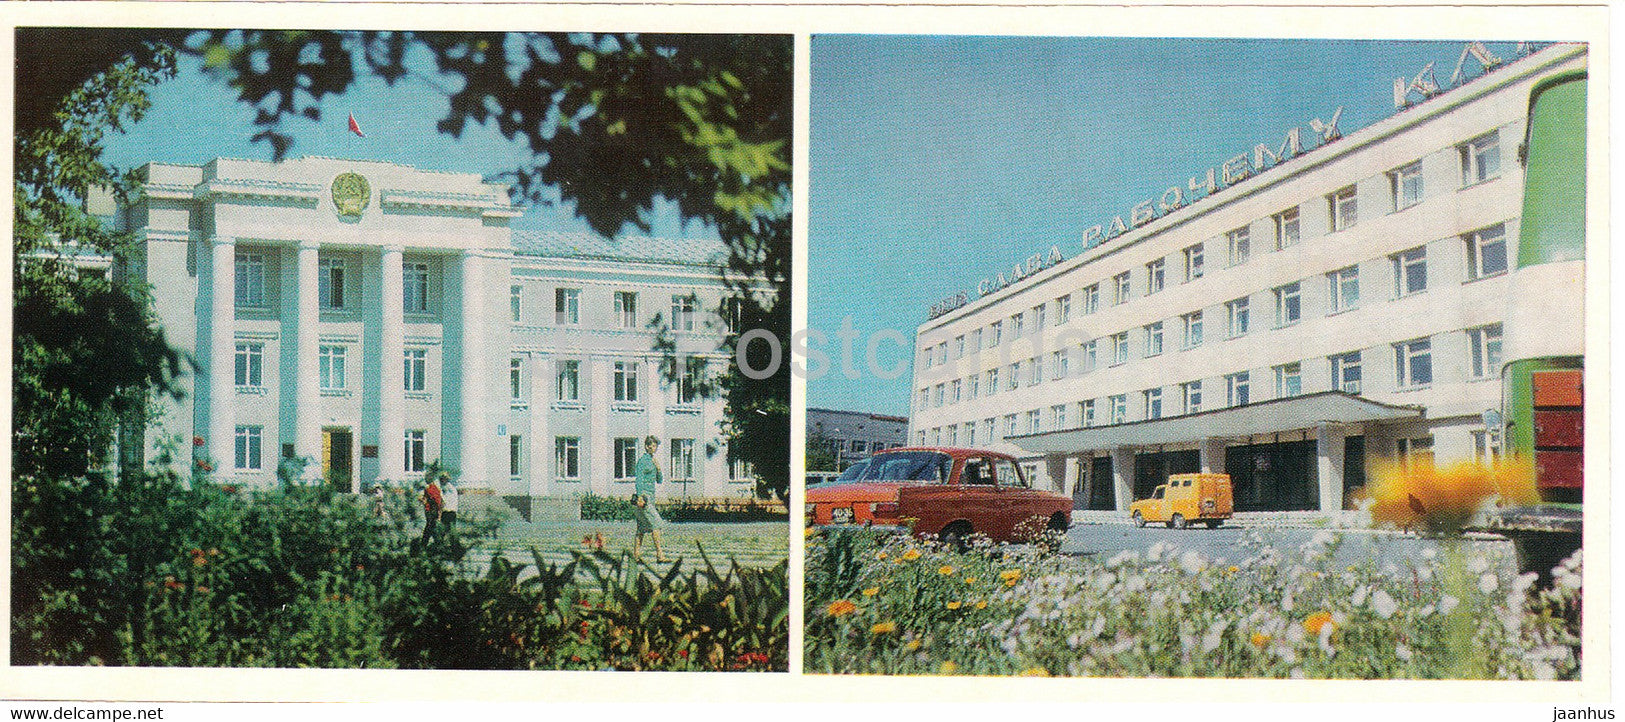 Kostanay - Regional Executive Committee building - House of Trade Unions - 1985 - Kazakhstan USSR - unused - JH Postcards